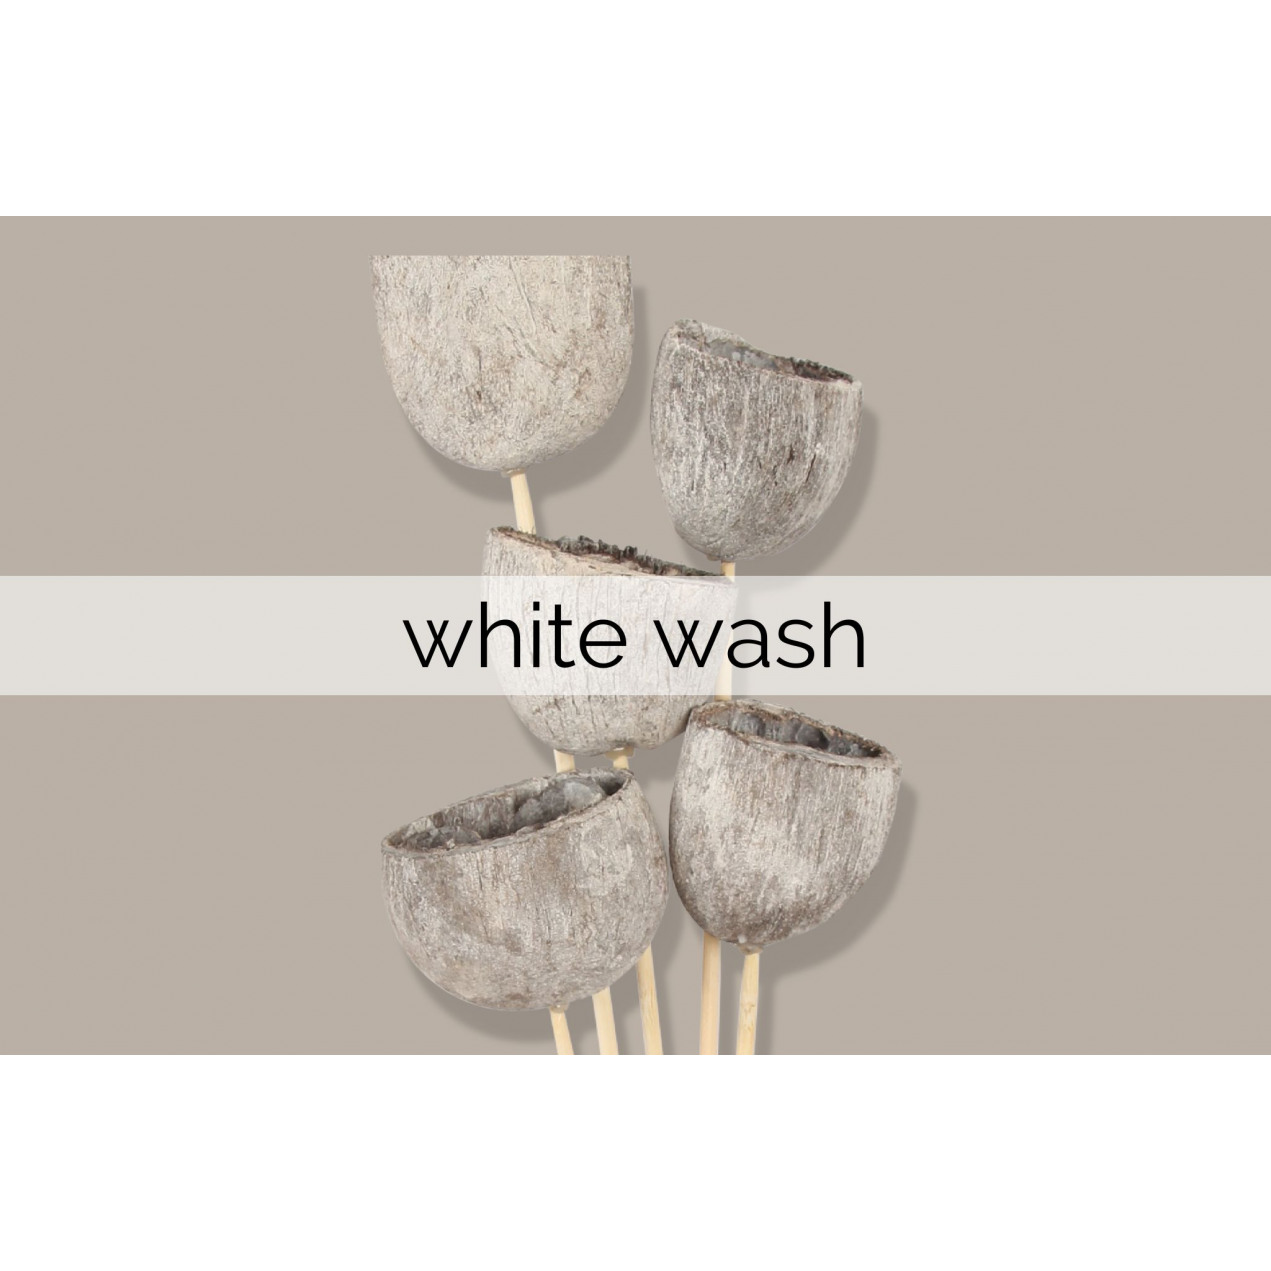 white wash